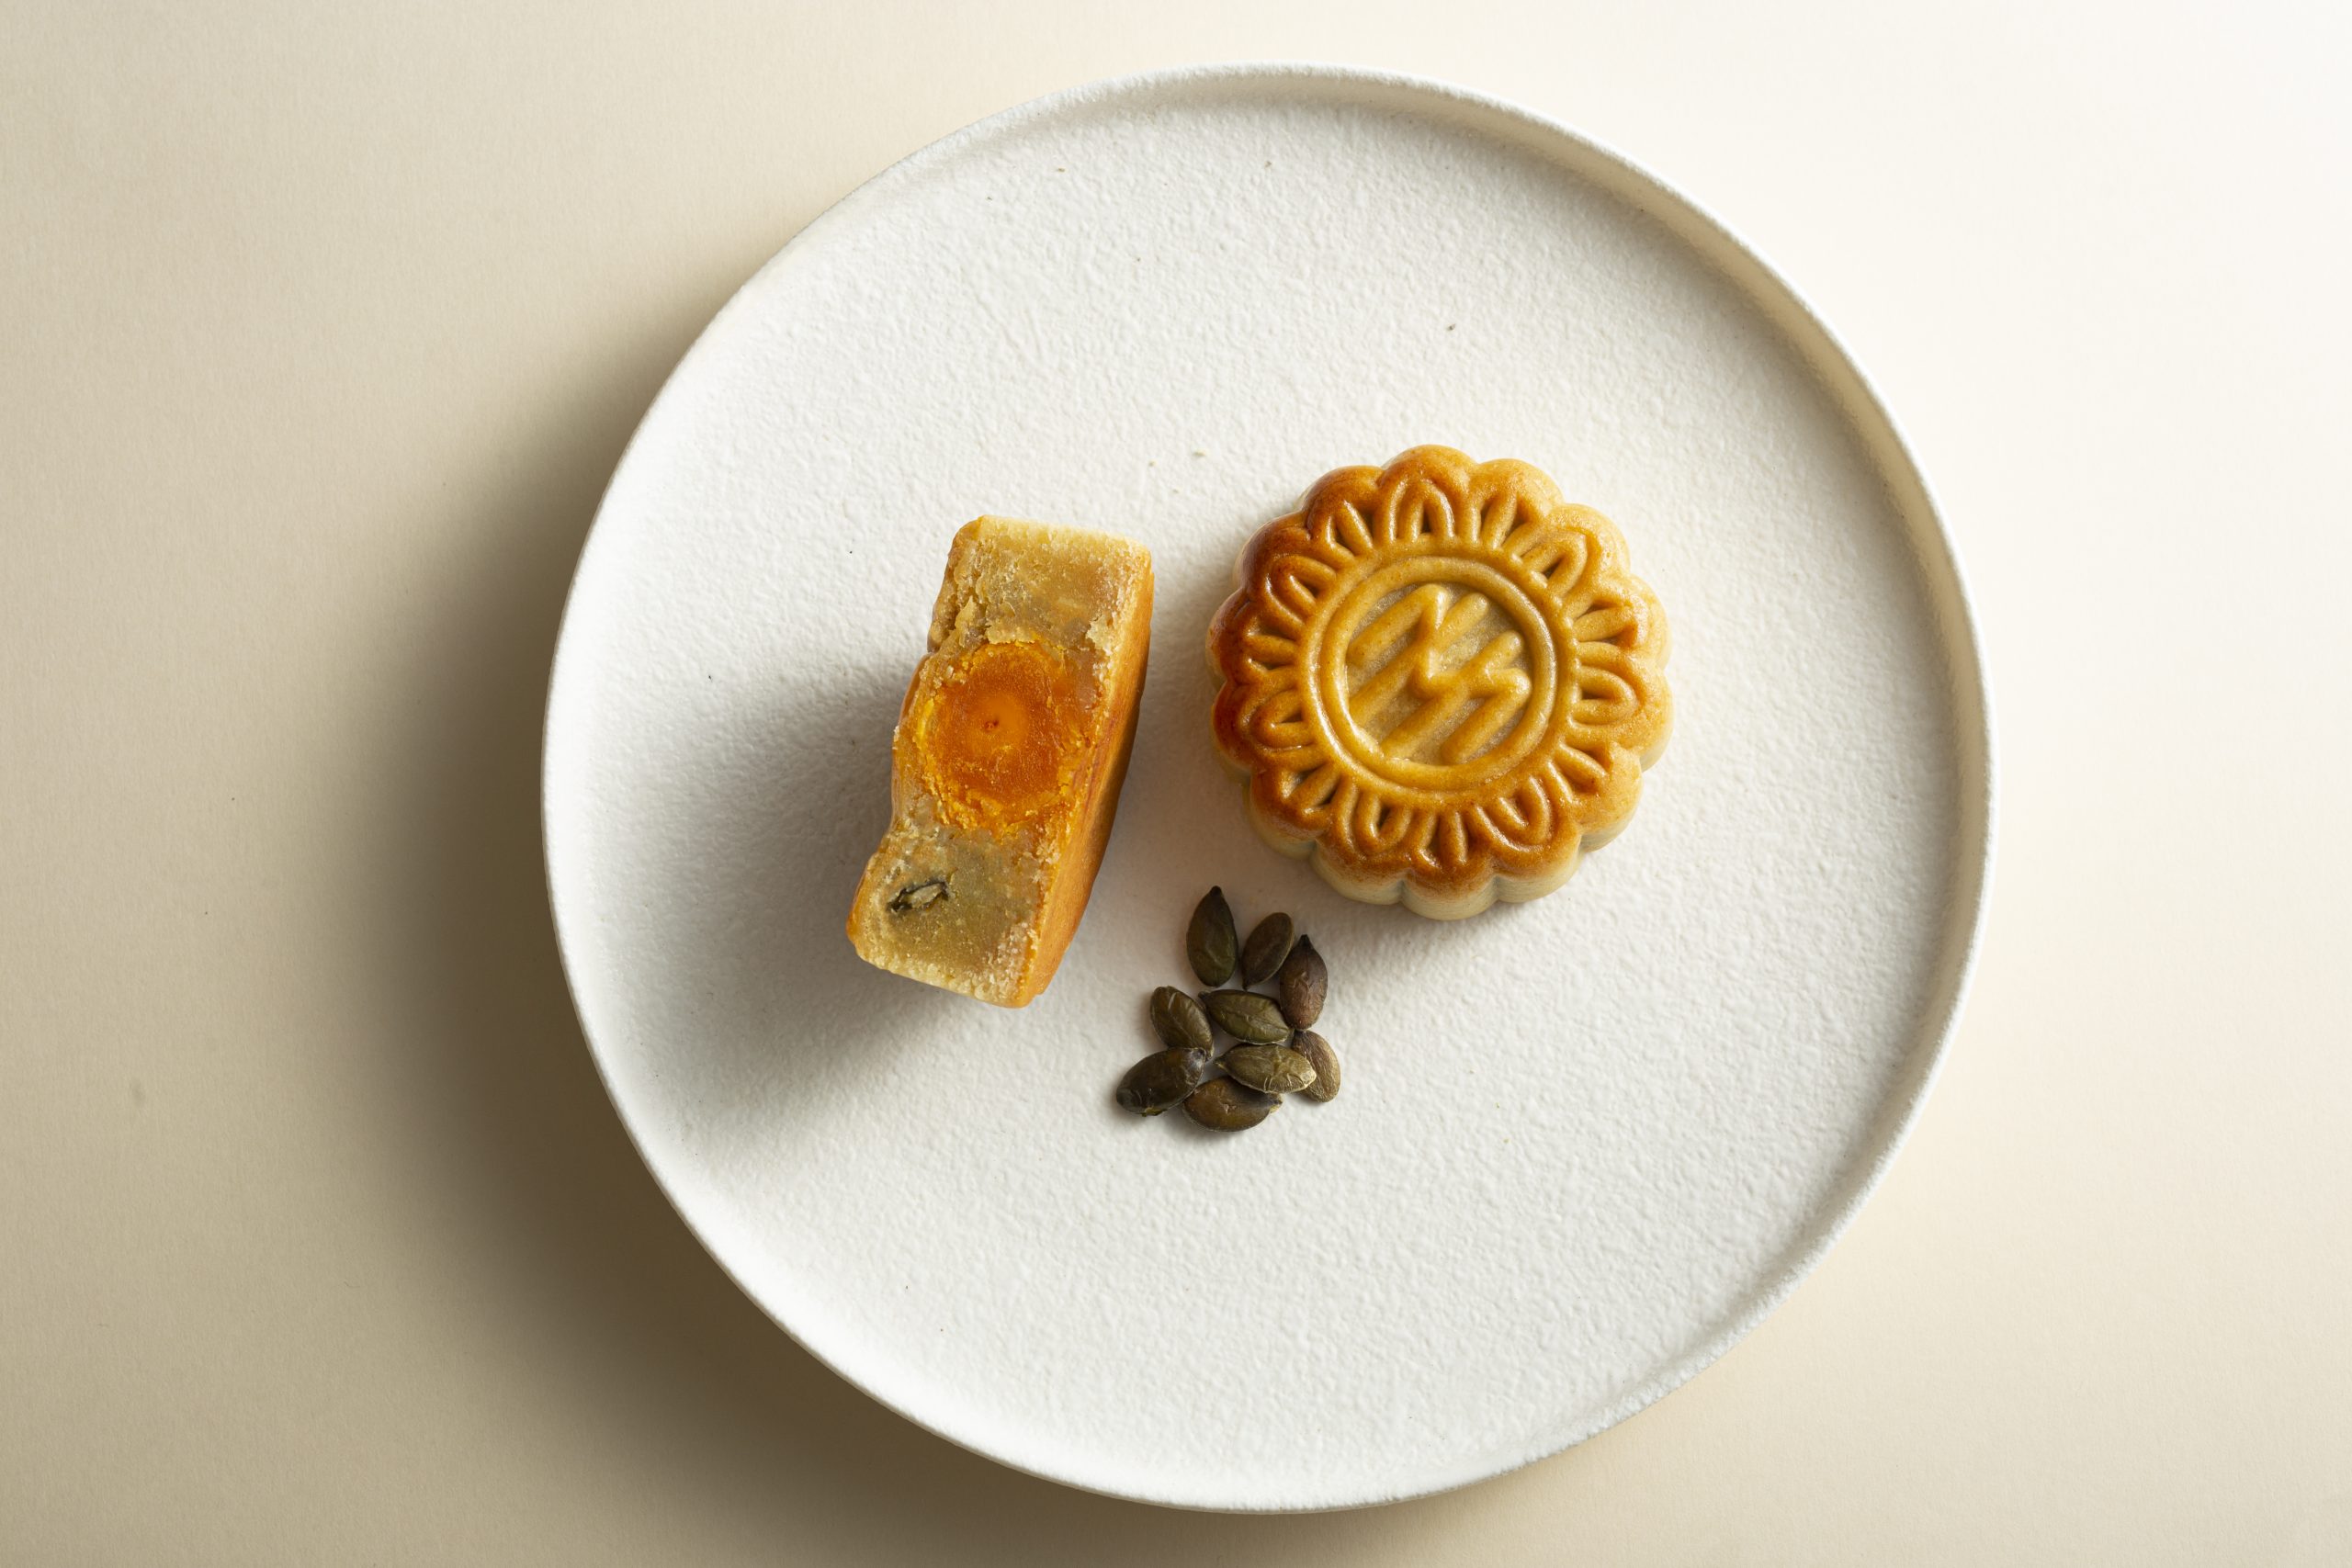 metropole-hanoi-unveils-new-mooncake-flavors-elegant-boxes-for-mid-autumn-festival